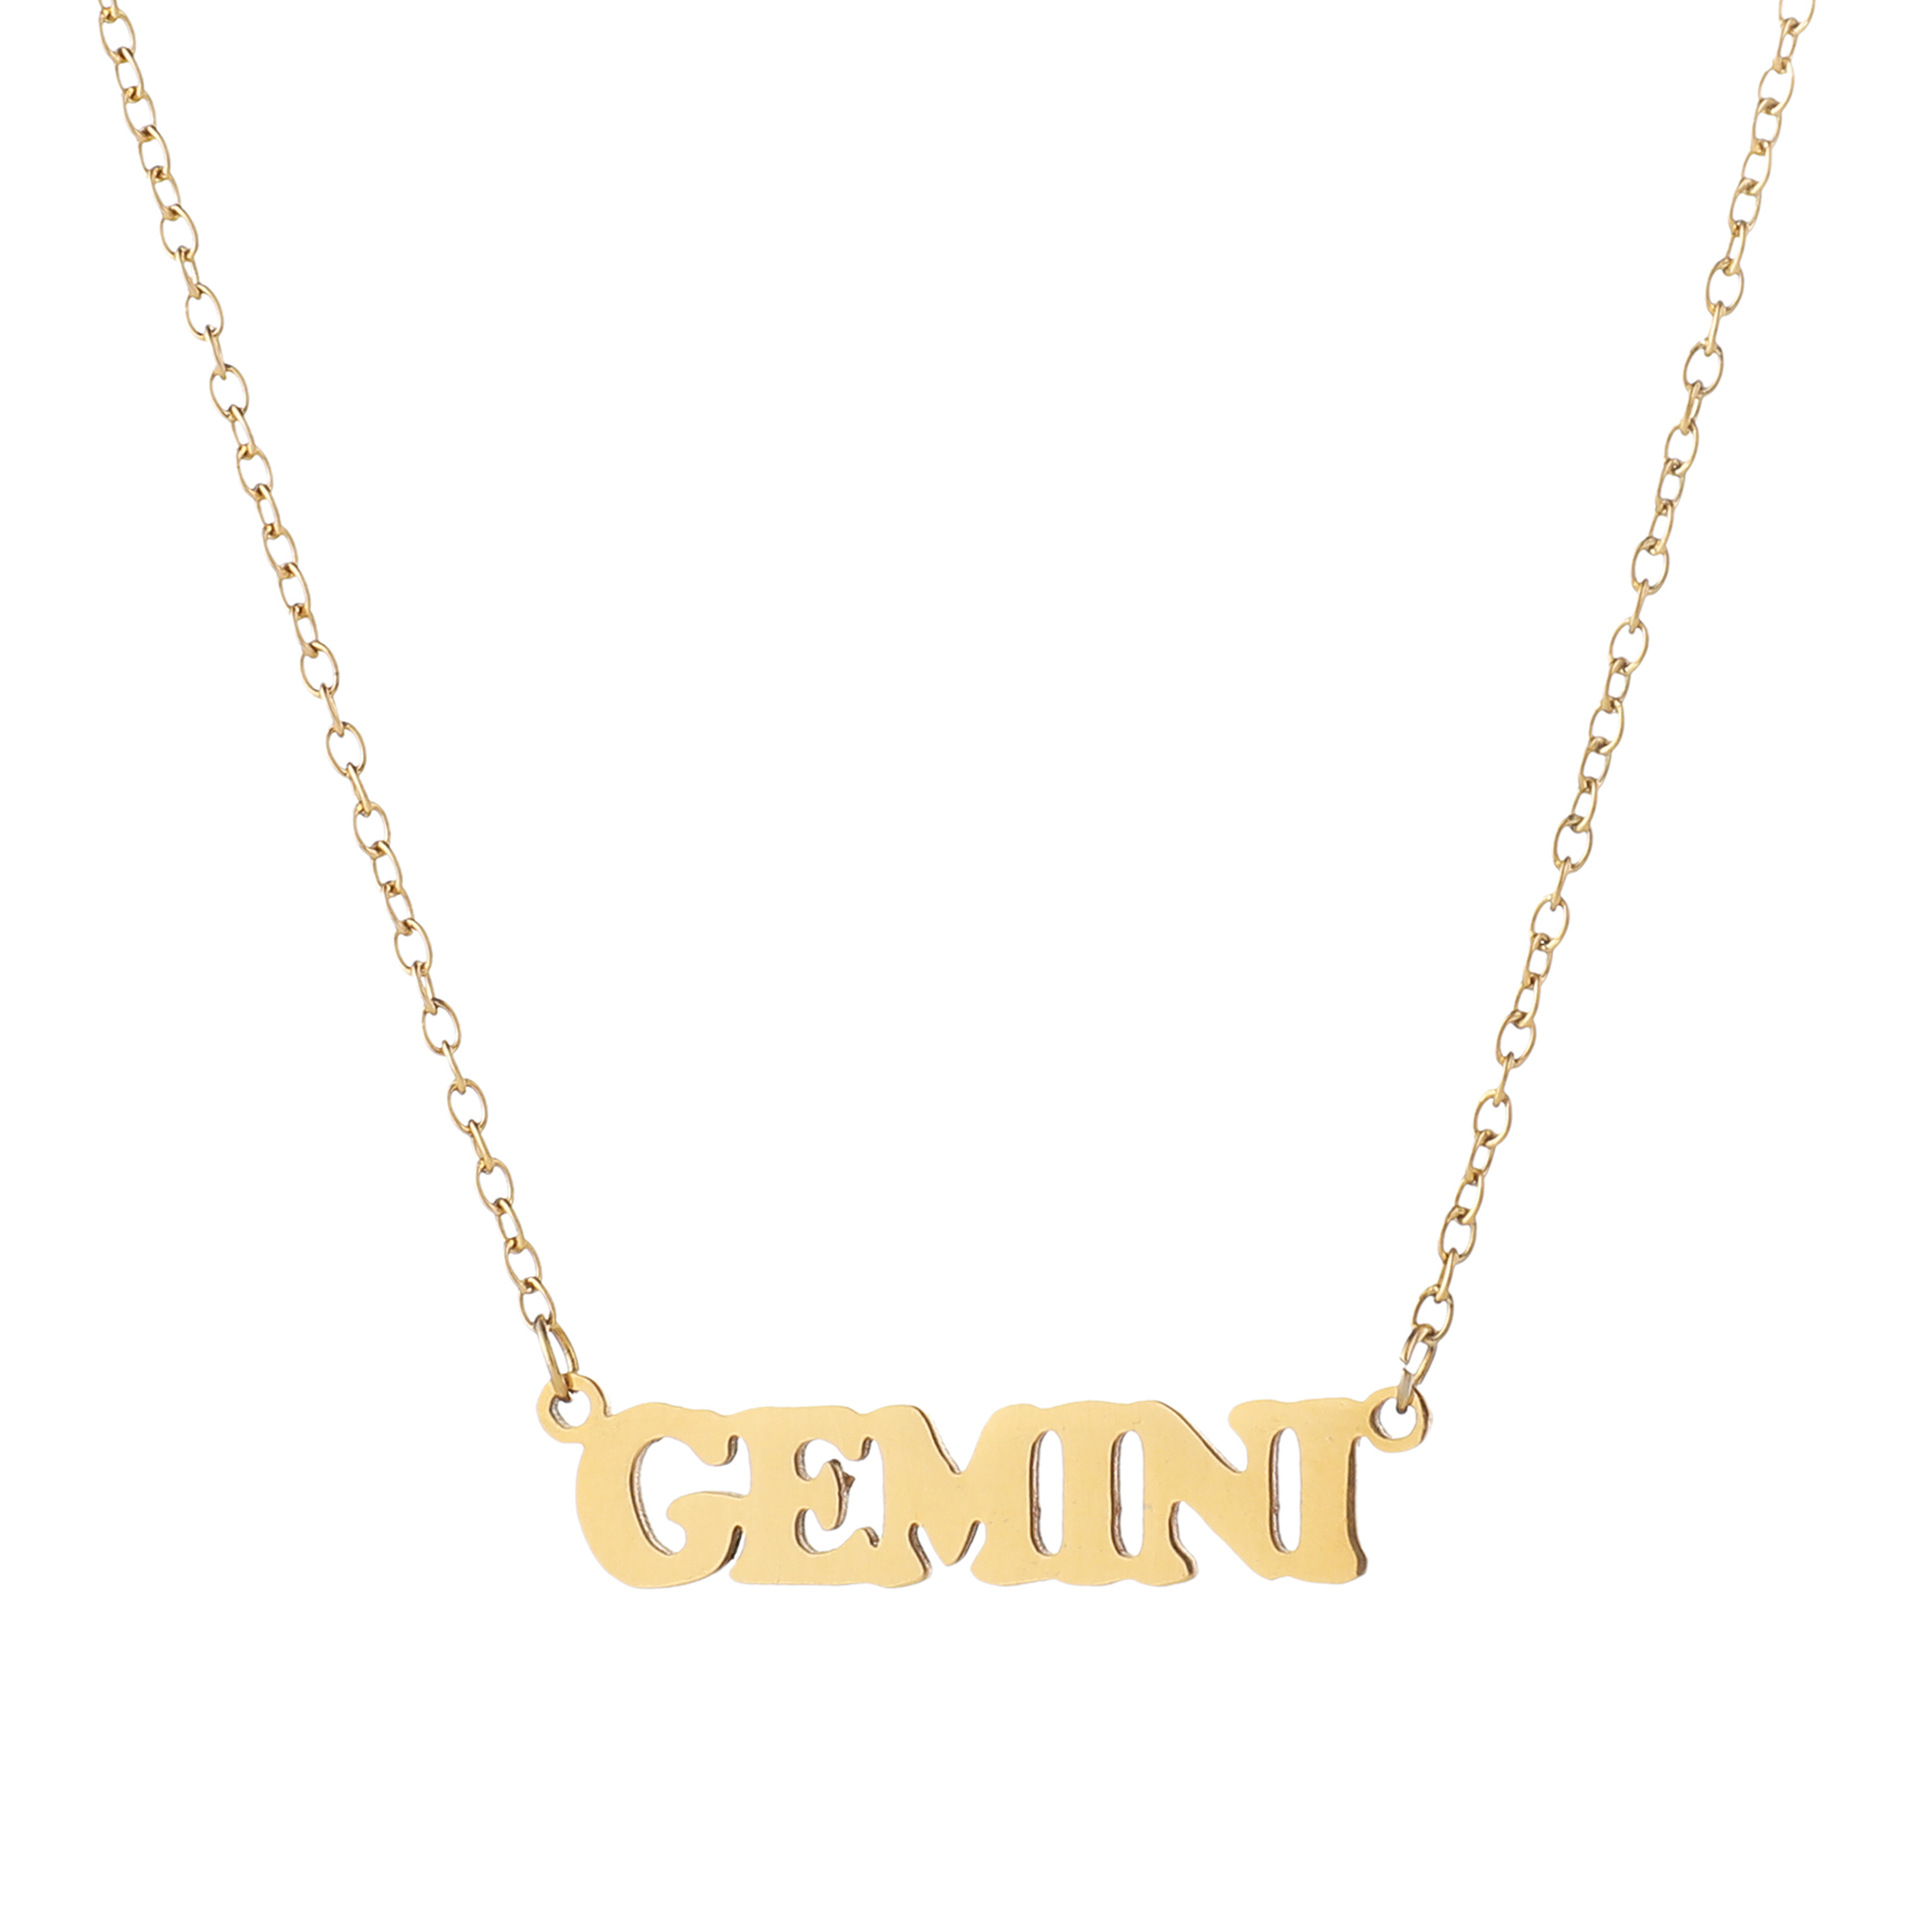 5:Gemini